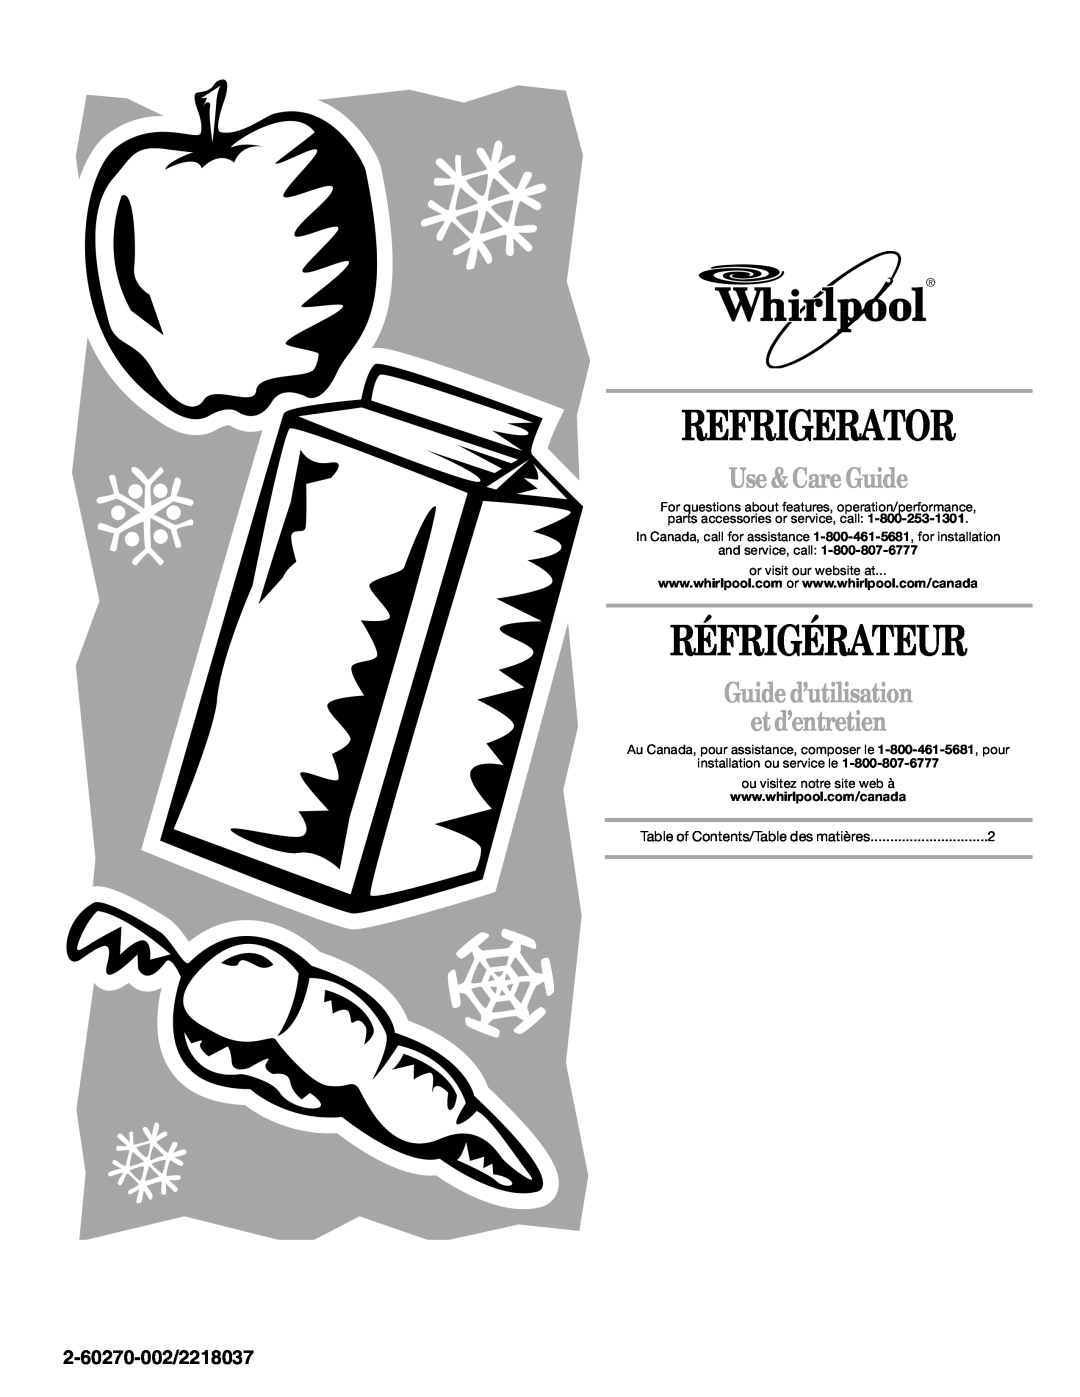 Whirlpool EL7ATRRKB00 manual Refrigerator, Réfrigérateur, Use & Care Guide, Guide d’utilisation et d’entretien 